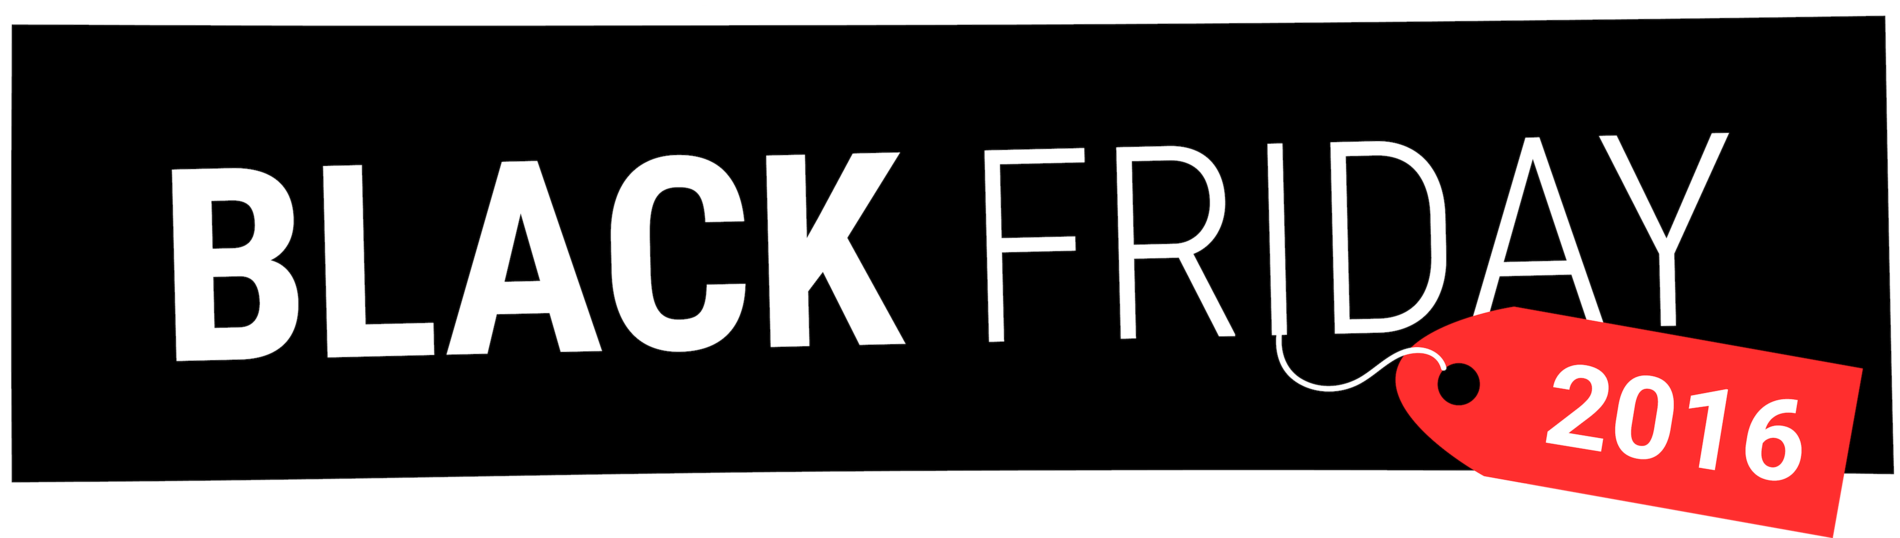 Black Friday PNG File Download Free